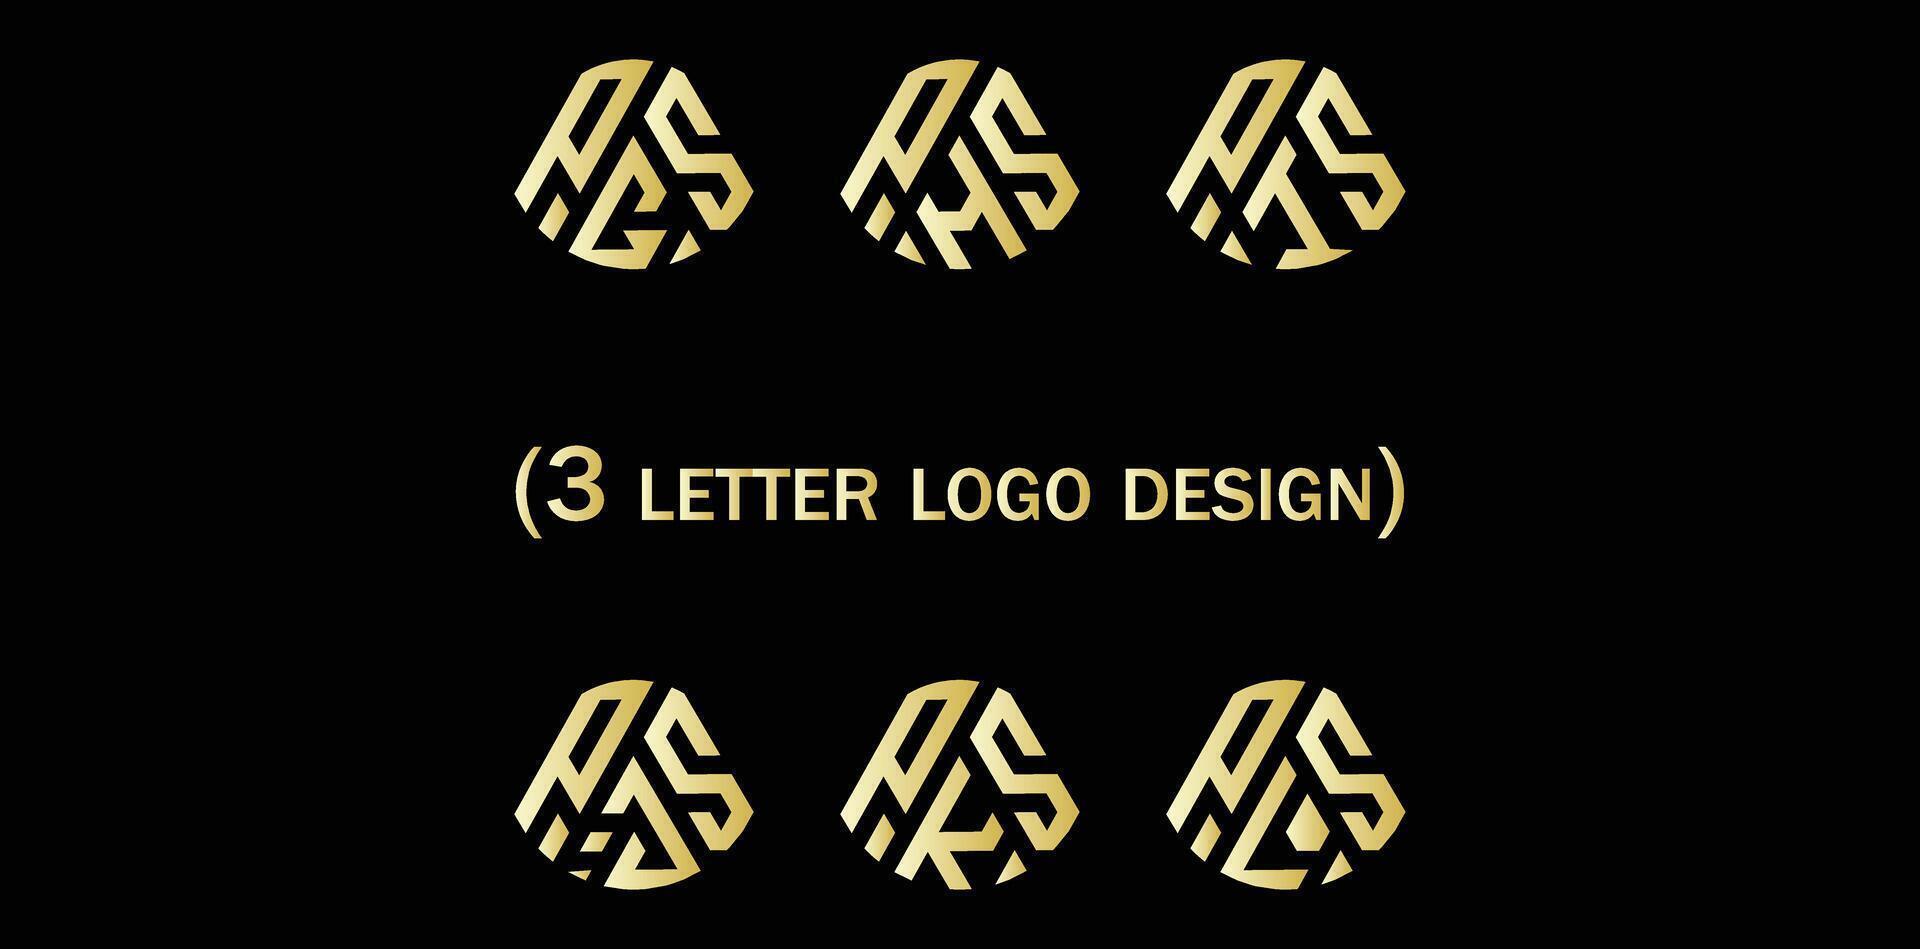 creativo 3 letra logo diseño psg,psh,psi,psj,psk,psl, vector